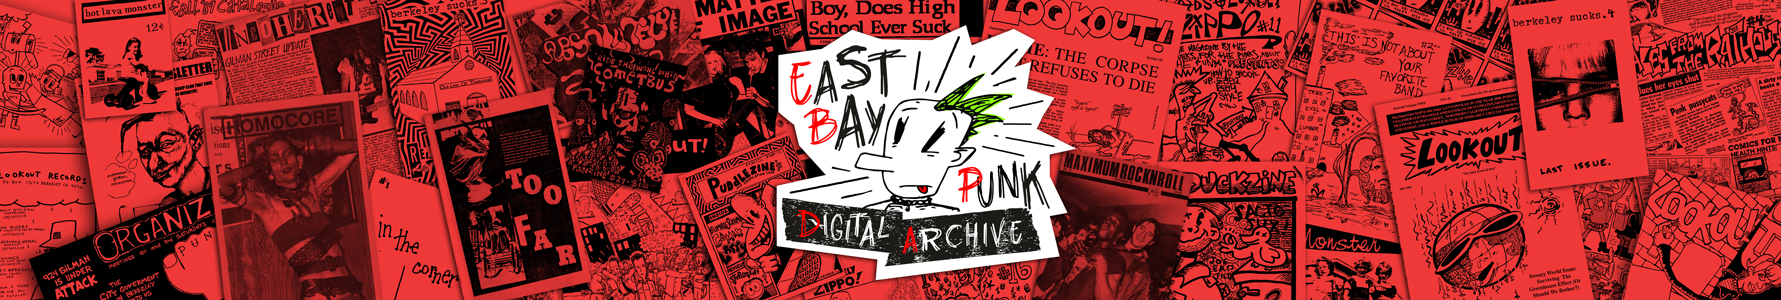 East Bay Punk Digital Archive